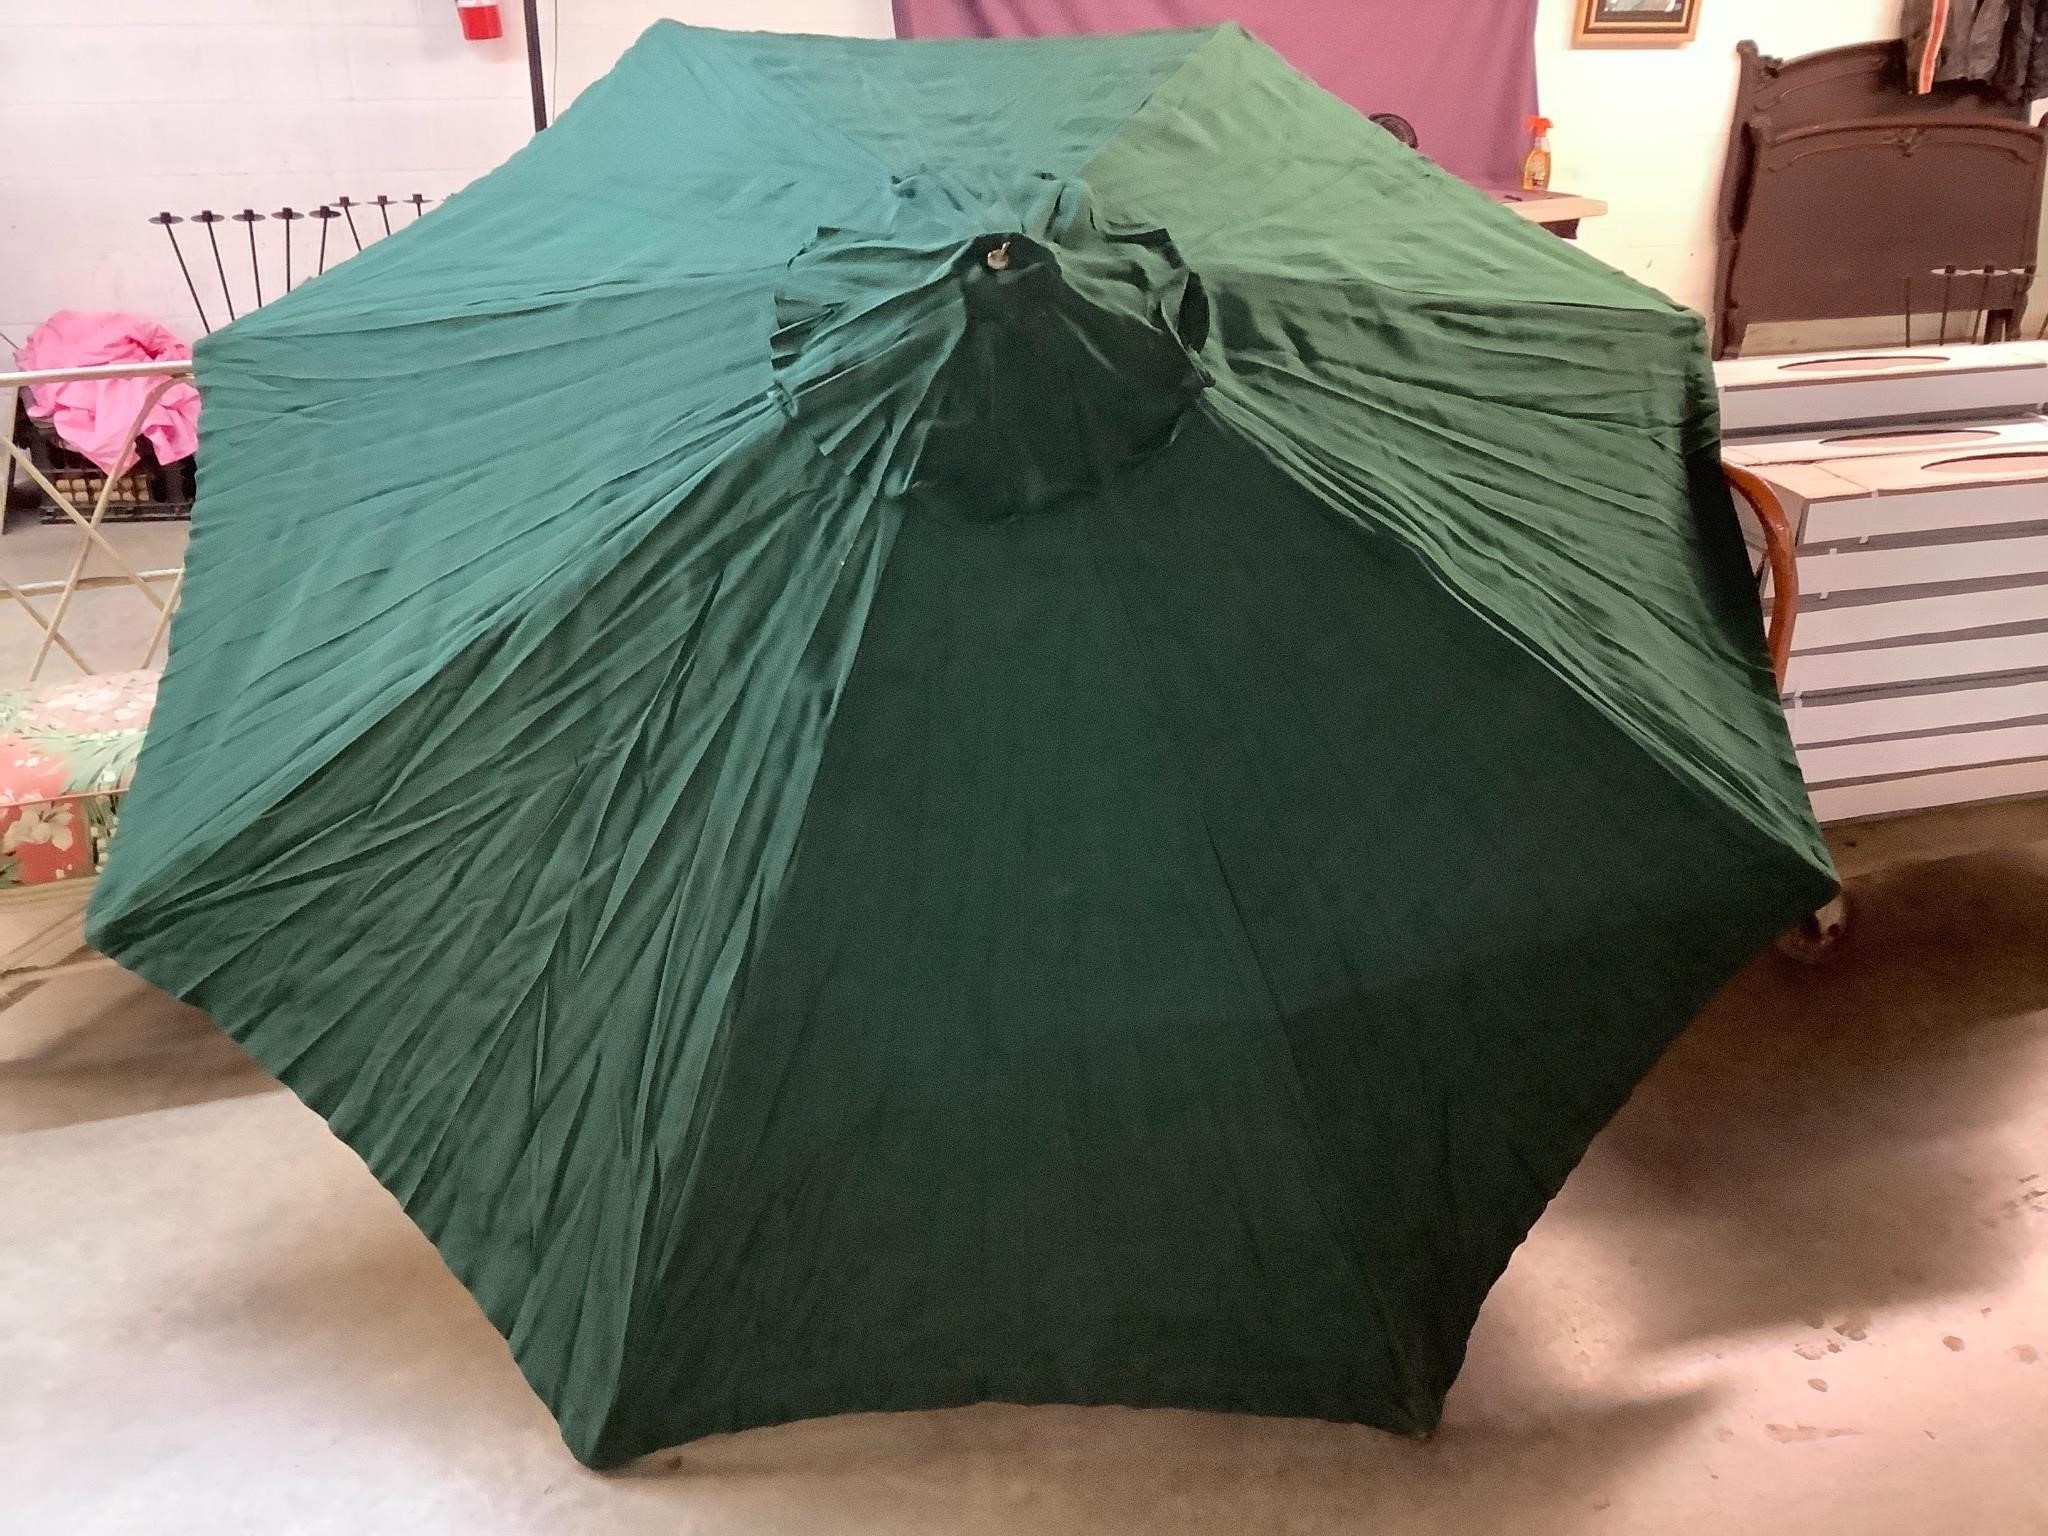 10 ft. Outdoor umbrella